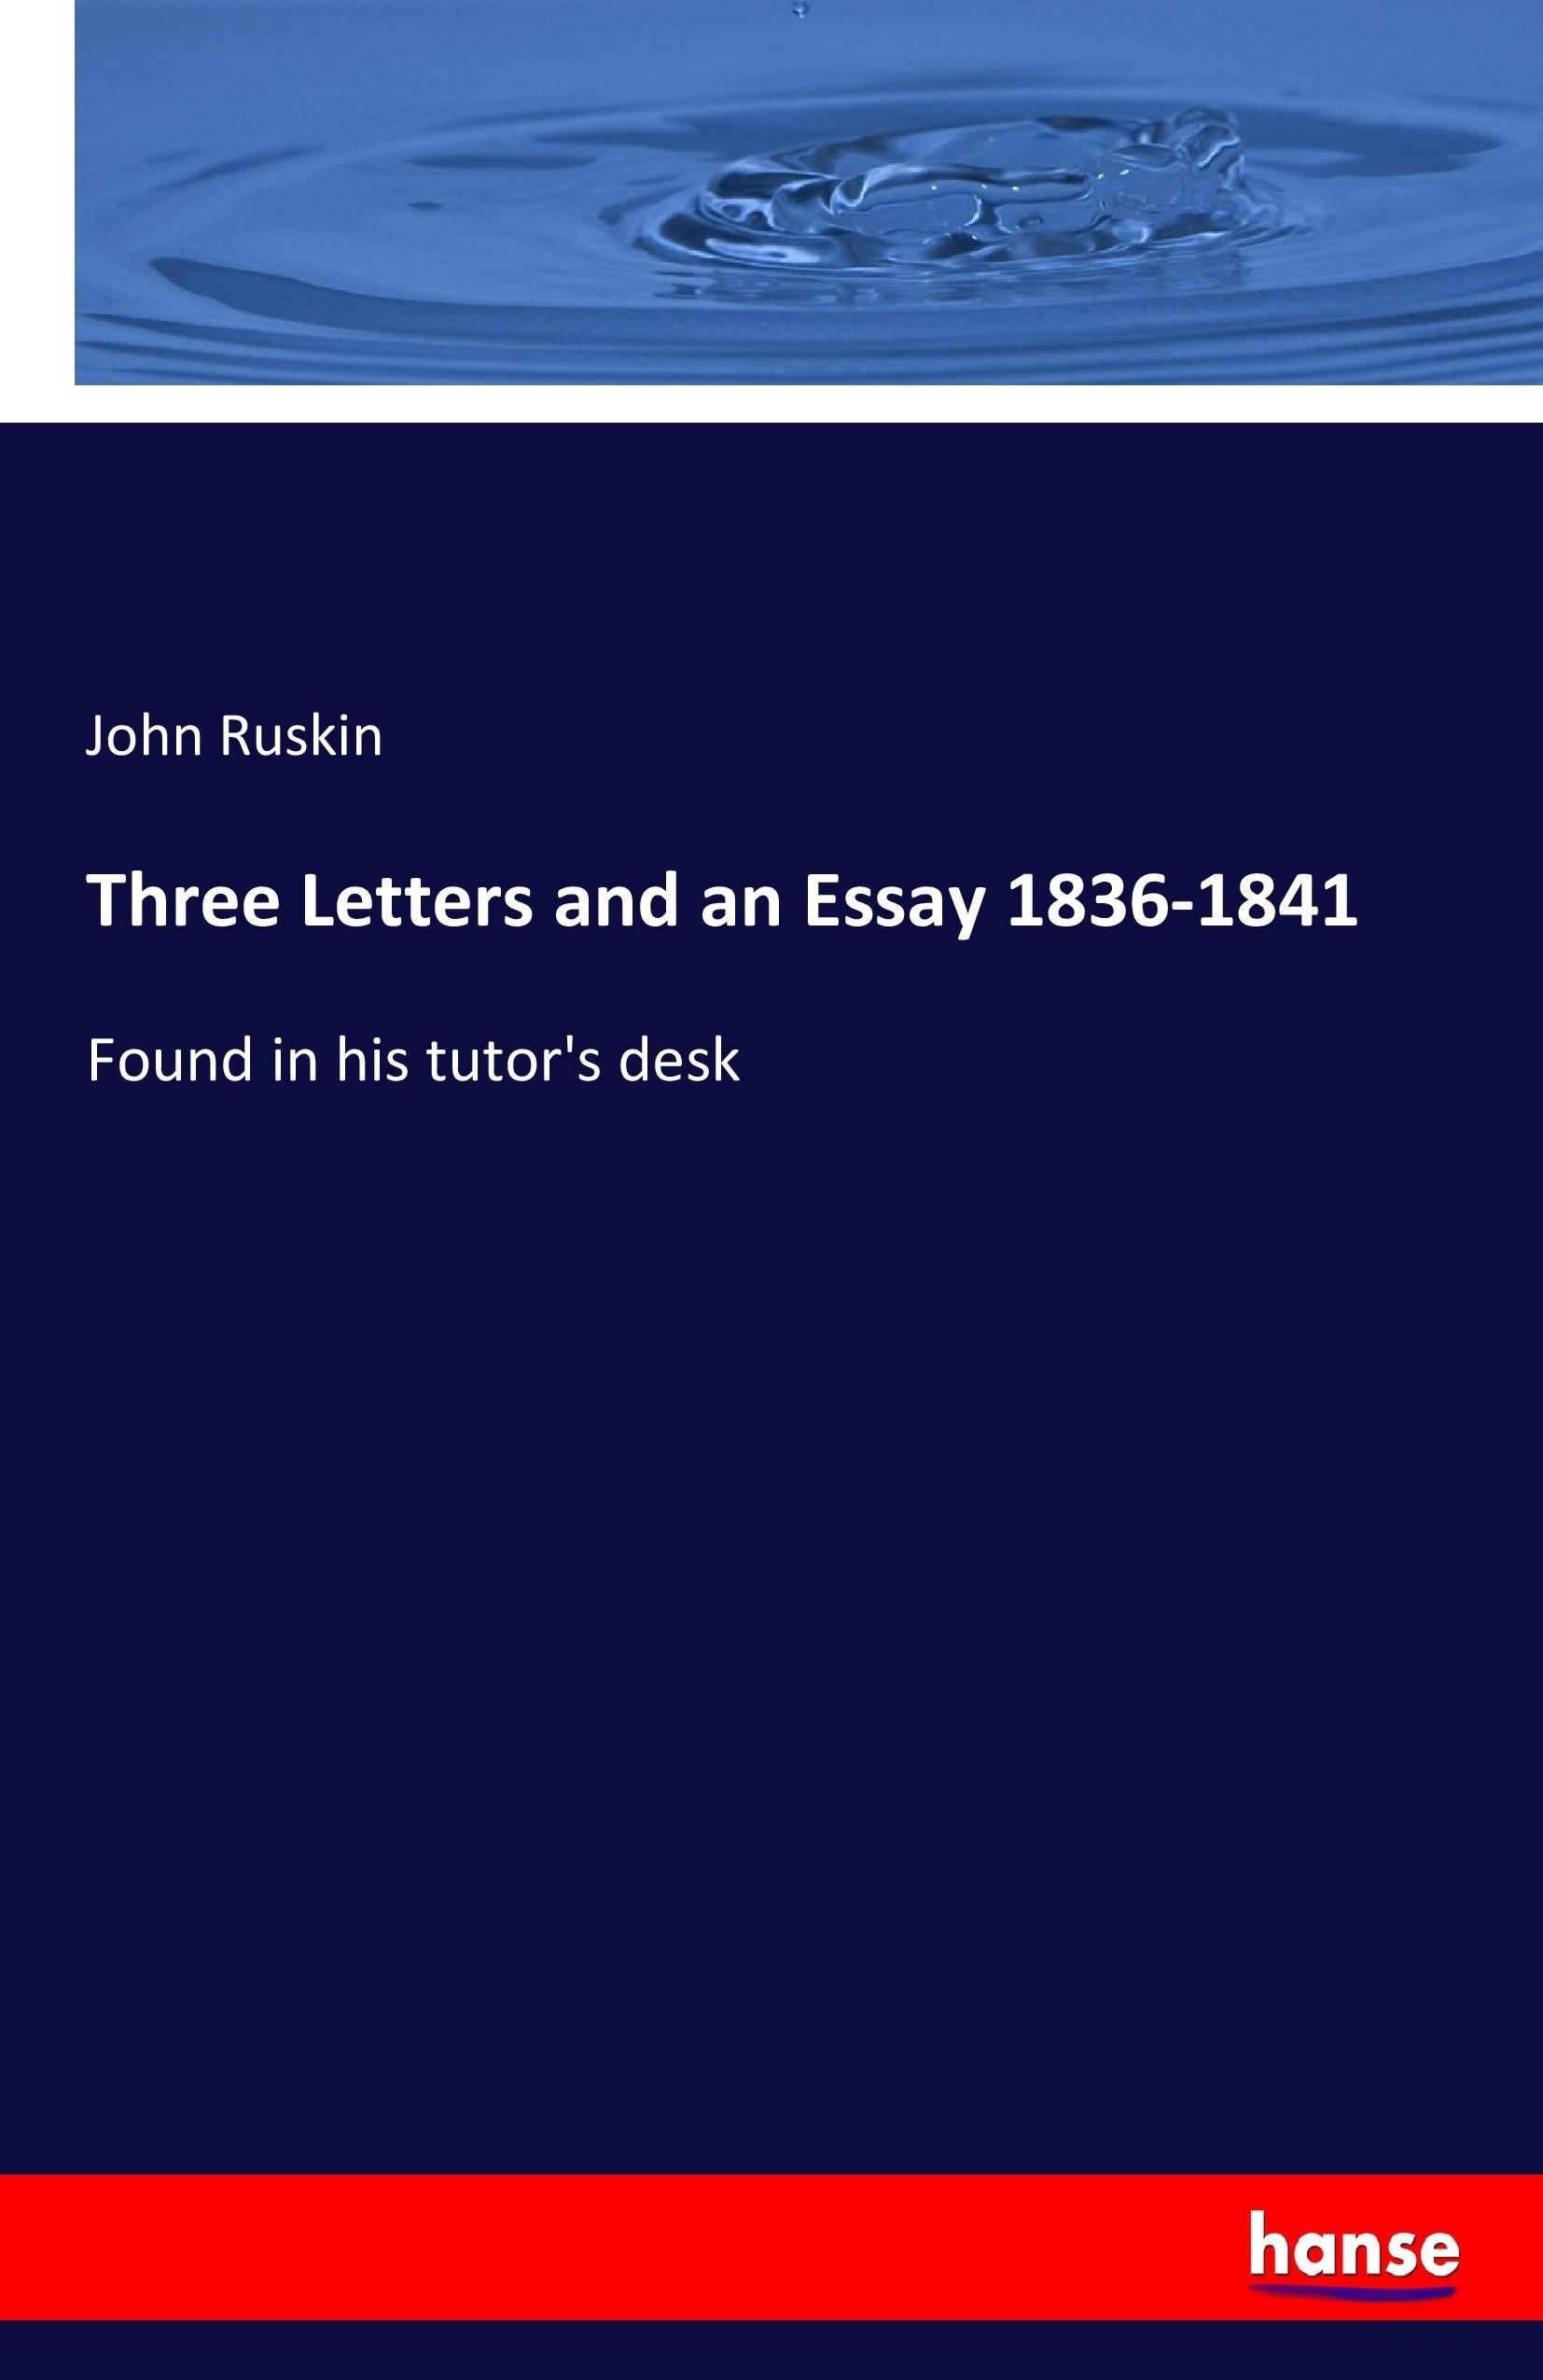 Three Letters and an Essay 1836-1841 | Found in his tutor's desk | John Ruskin | Taschenbuch | Paperback | 120 S. | Englisch | 2017 | hansebooks | EAN 9783744718400 - Ruskin, John